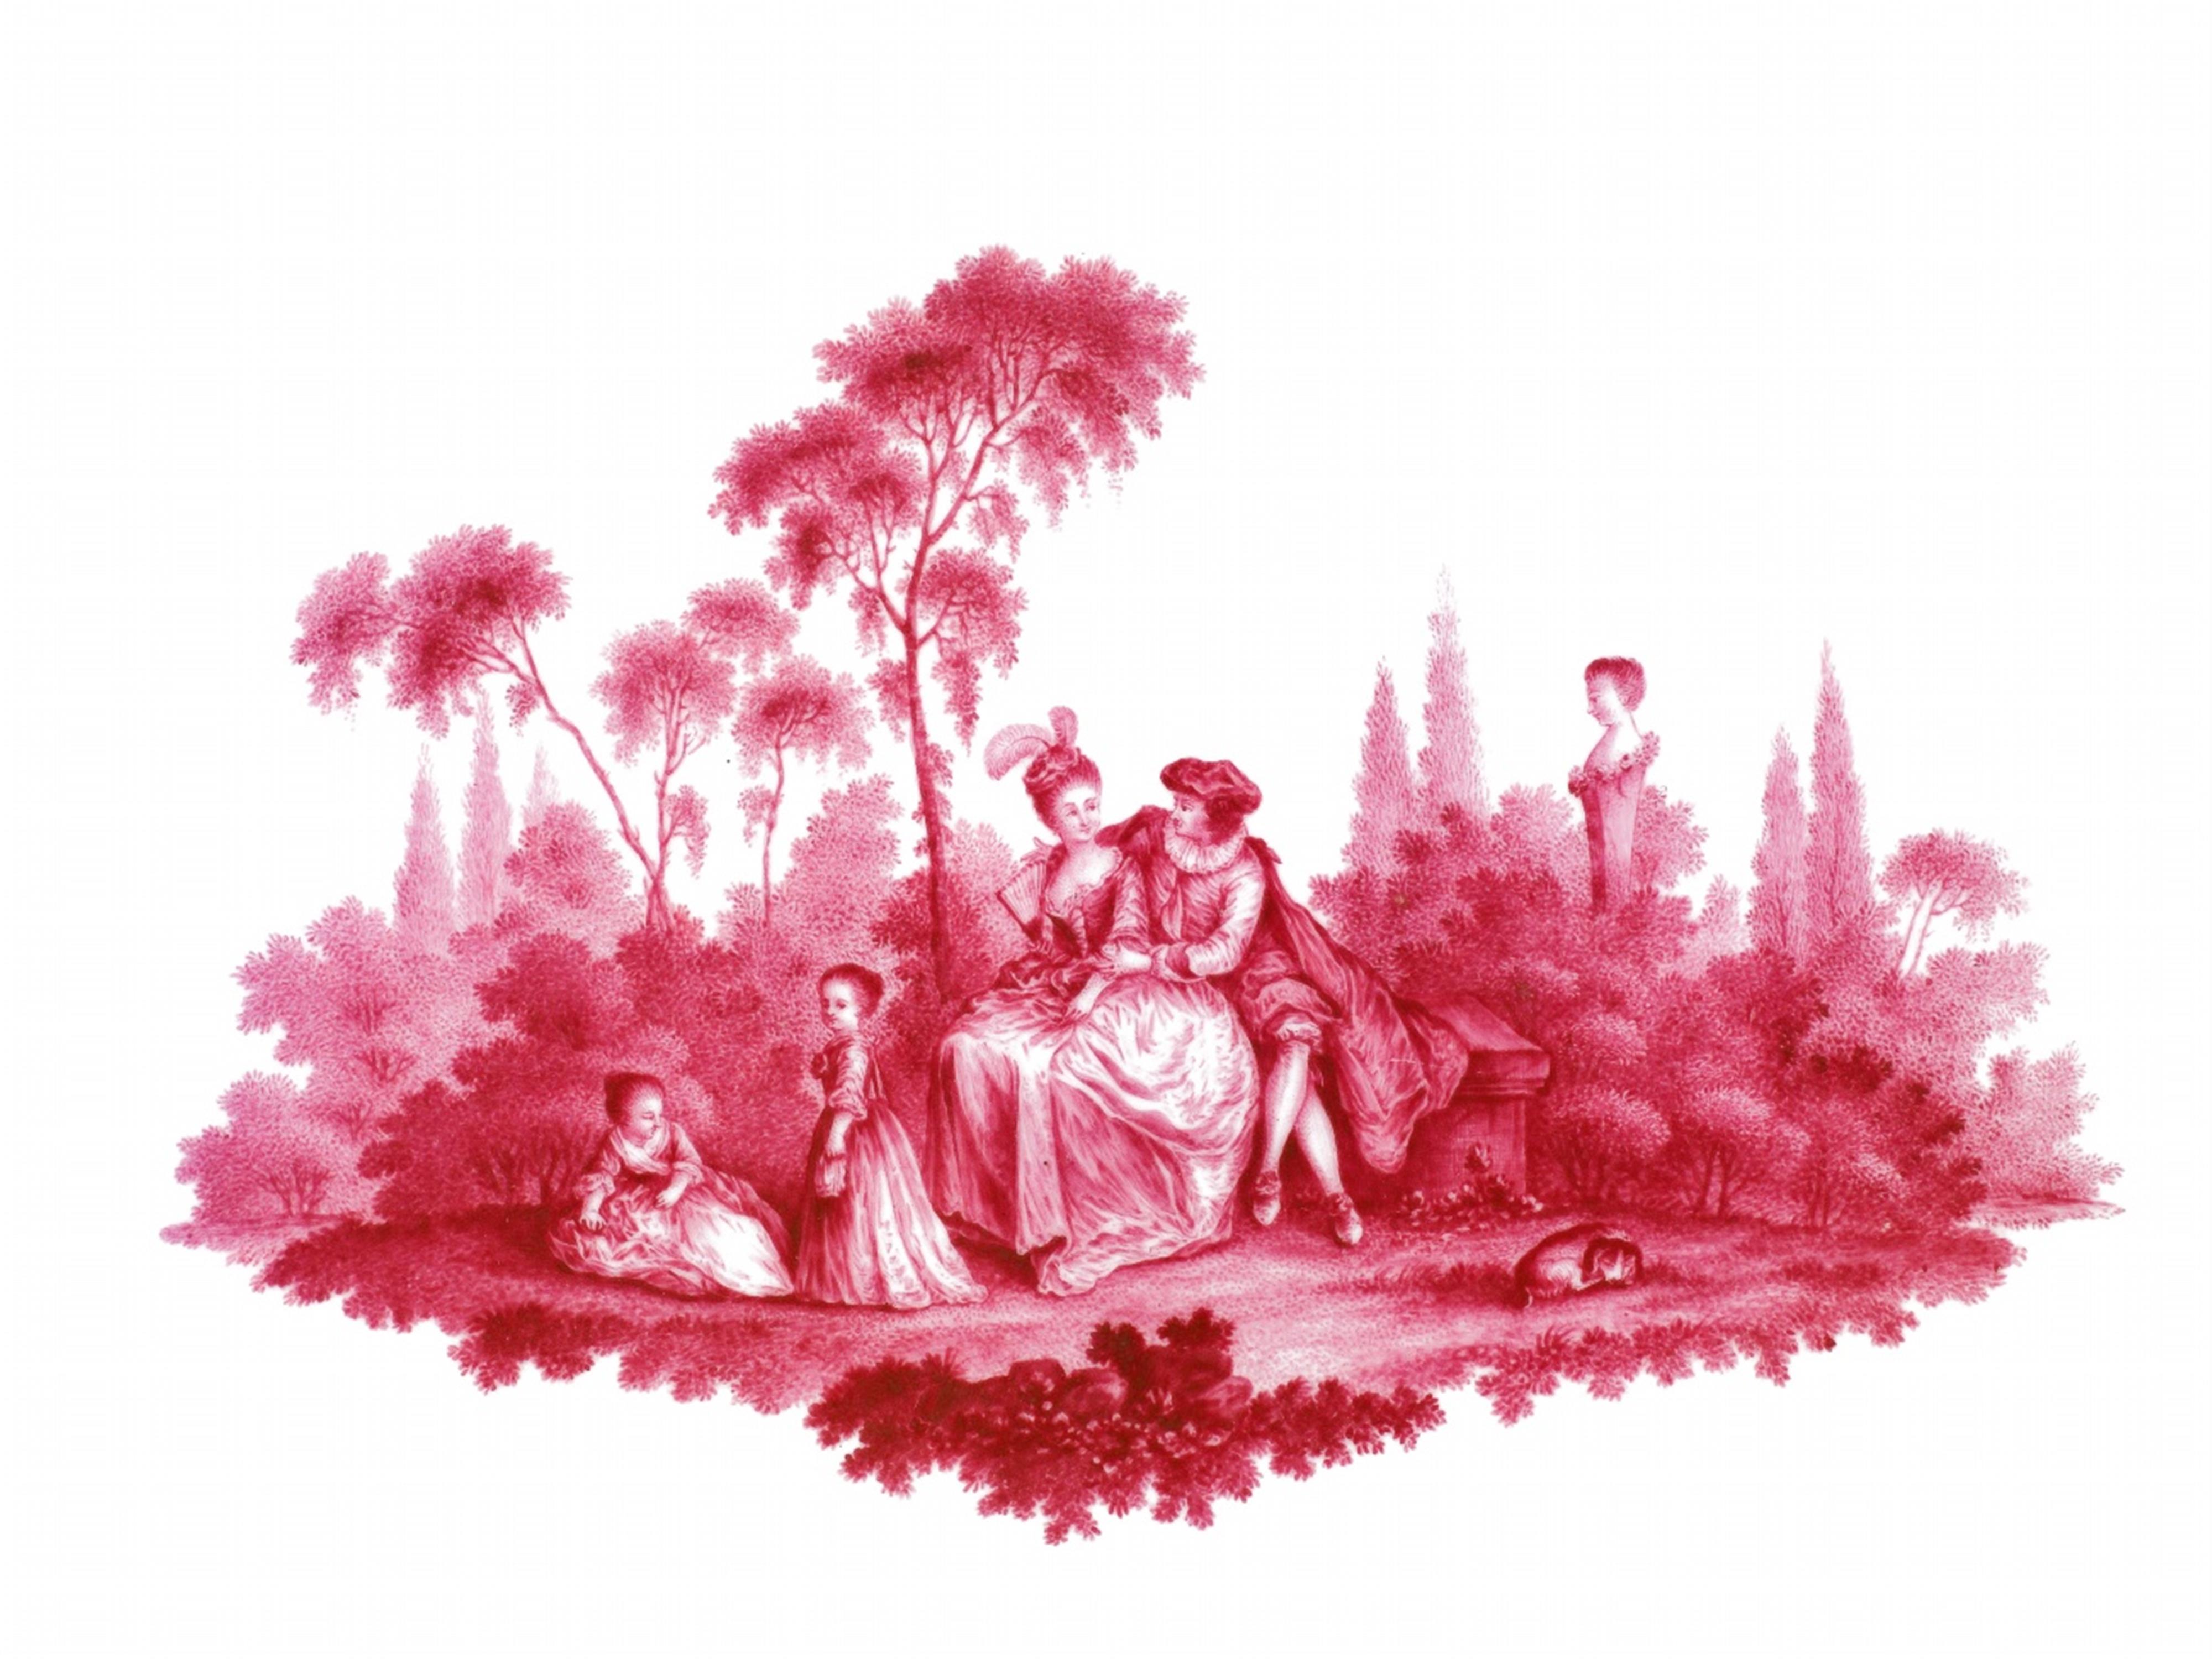 Tête-à-tête mit purpurnen Watteauszenen - image-5